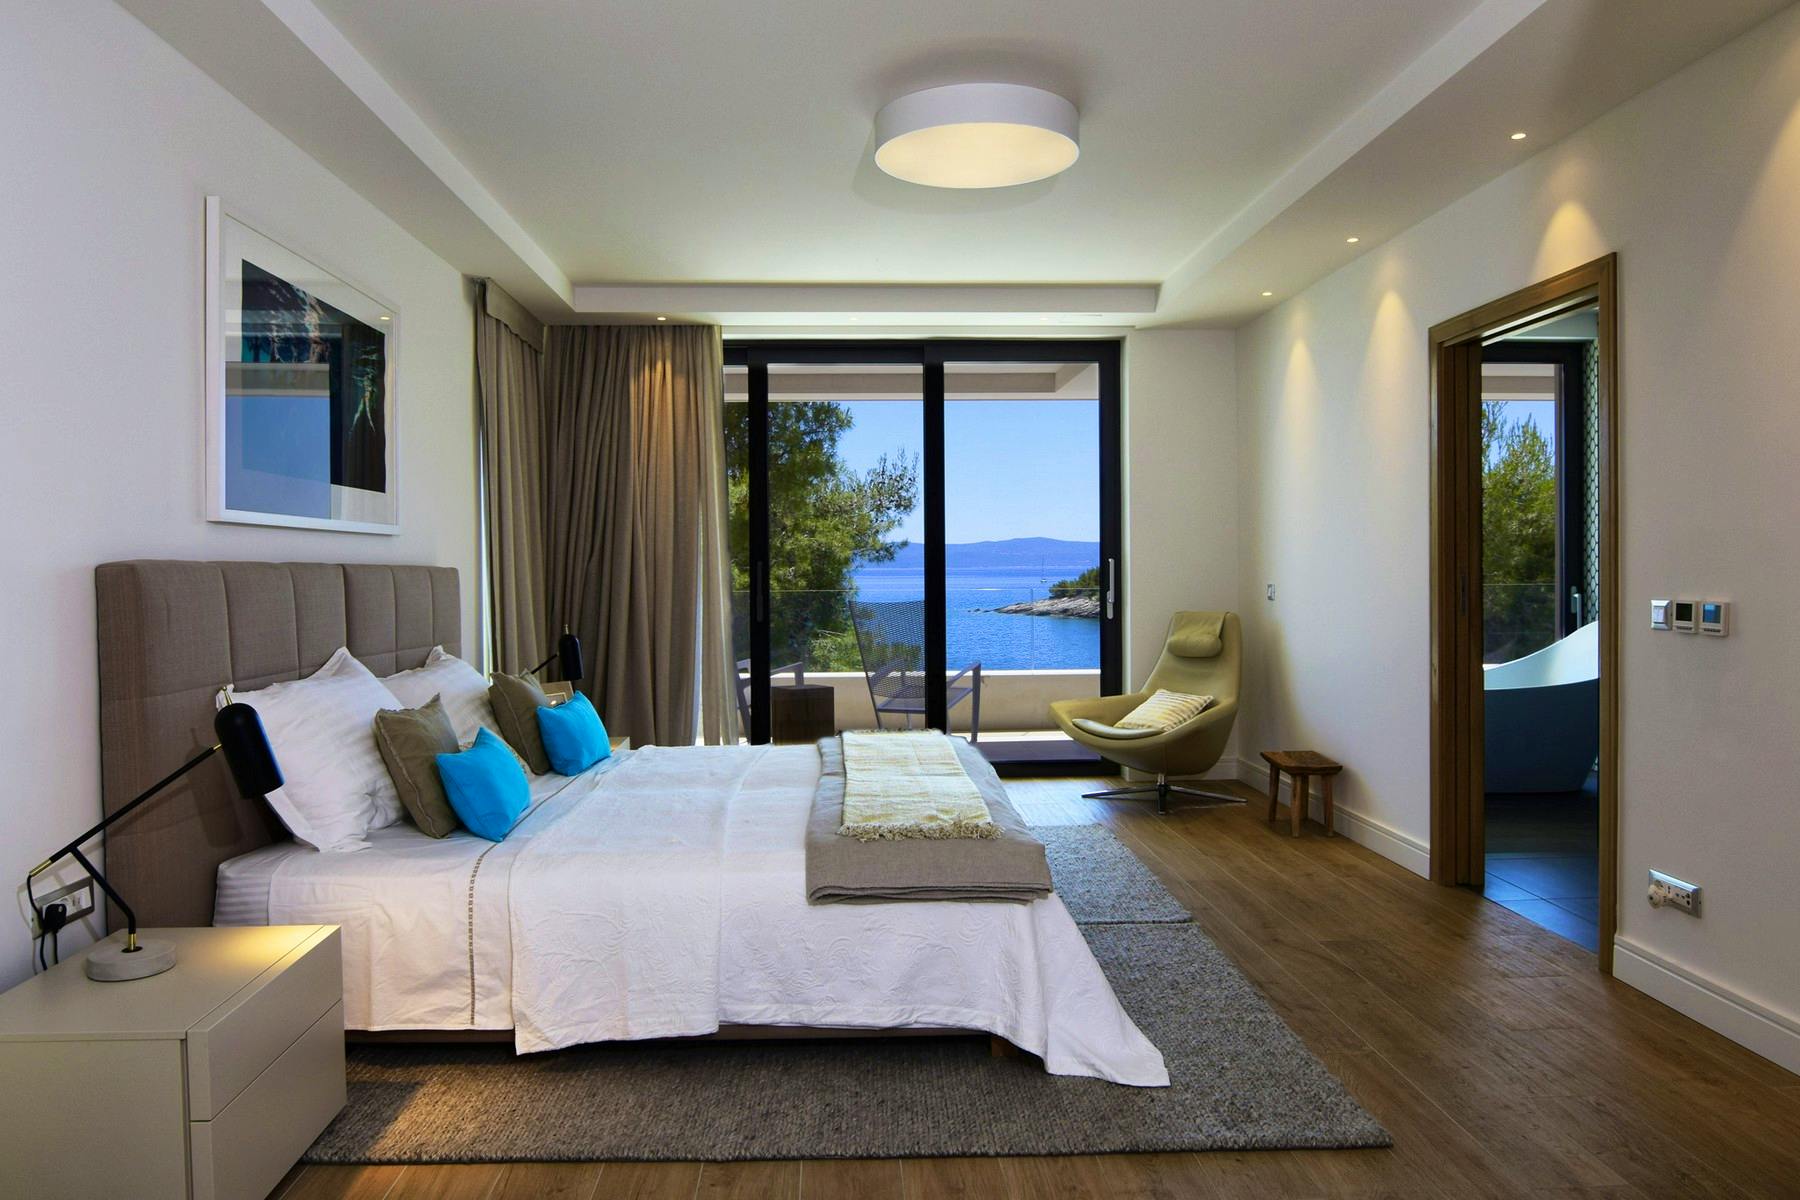 Spacious bedroom overlooking sea